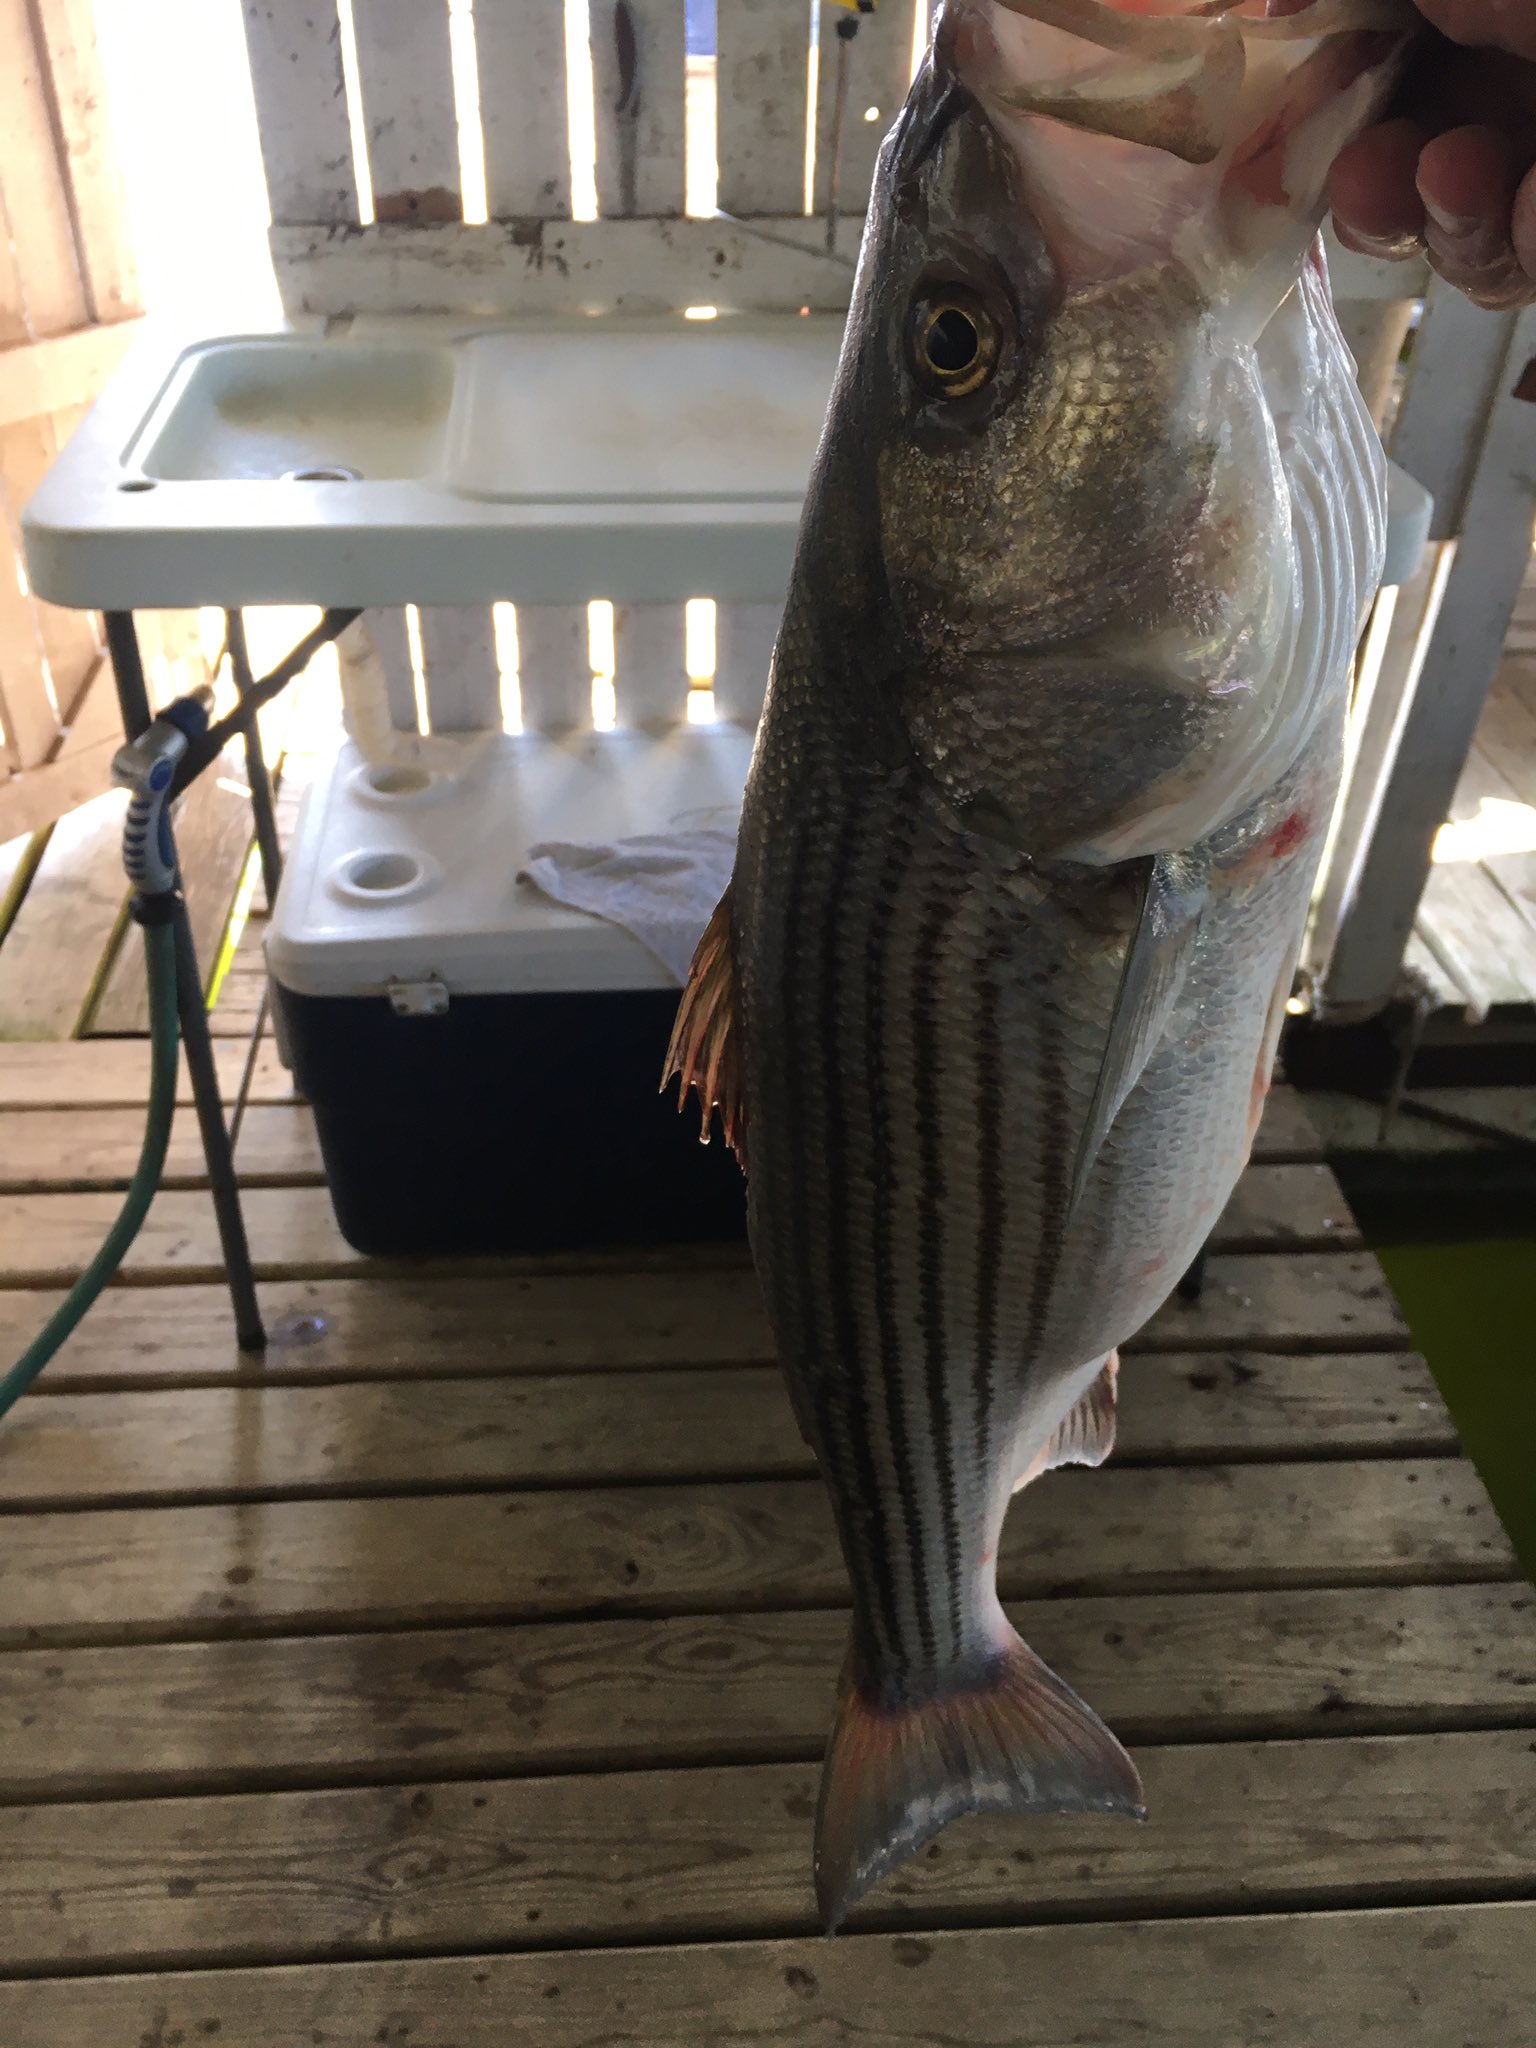 A nice Striped Bass on Lake Texoma